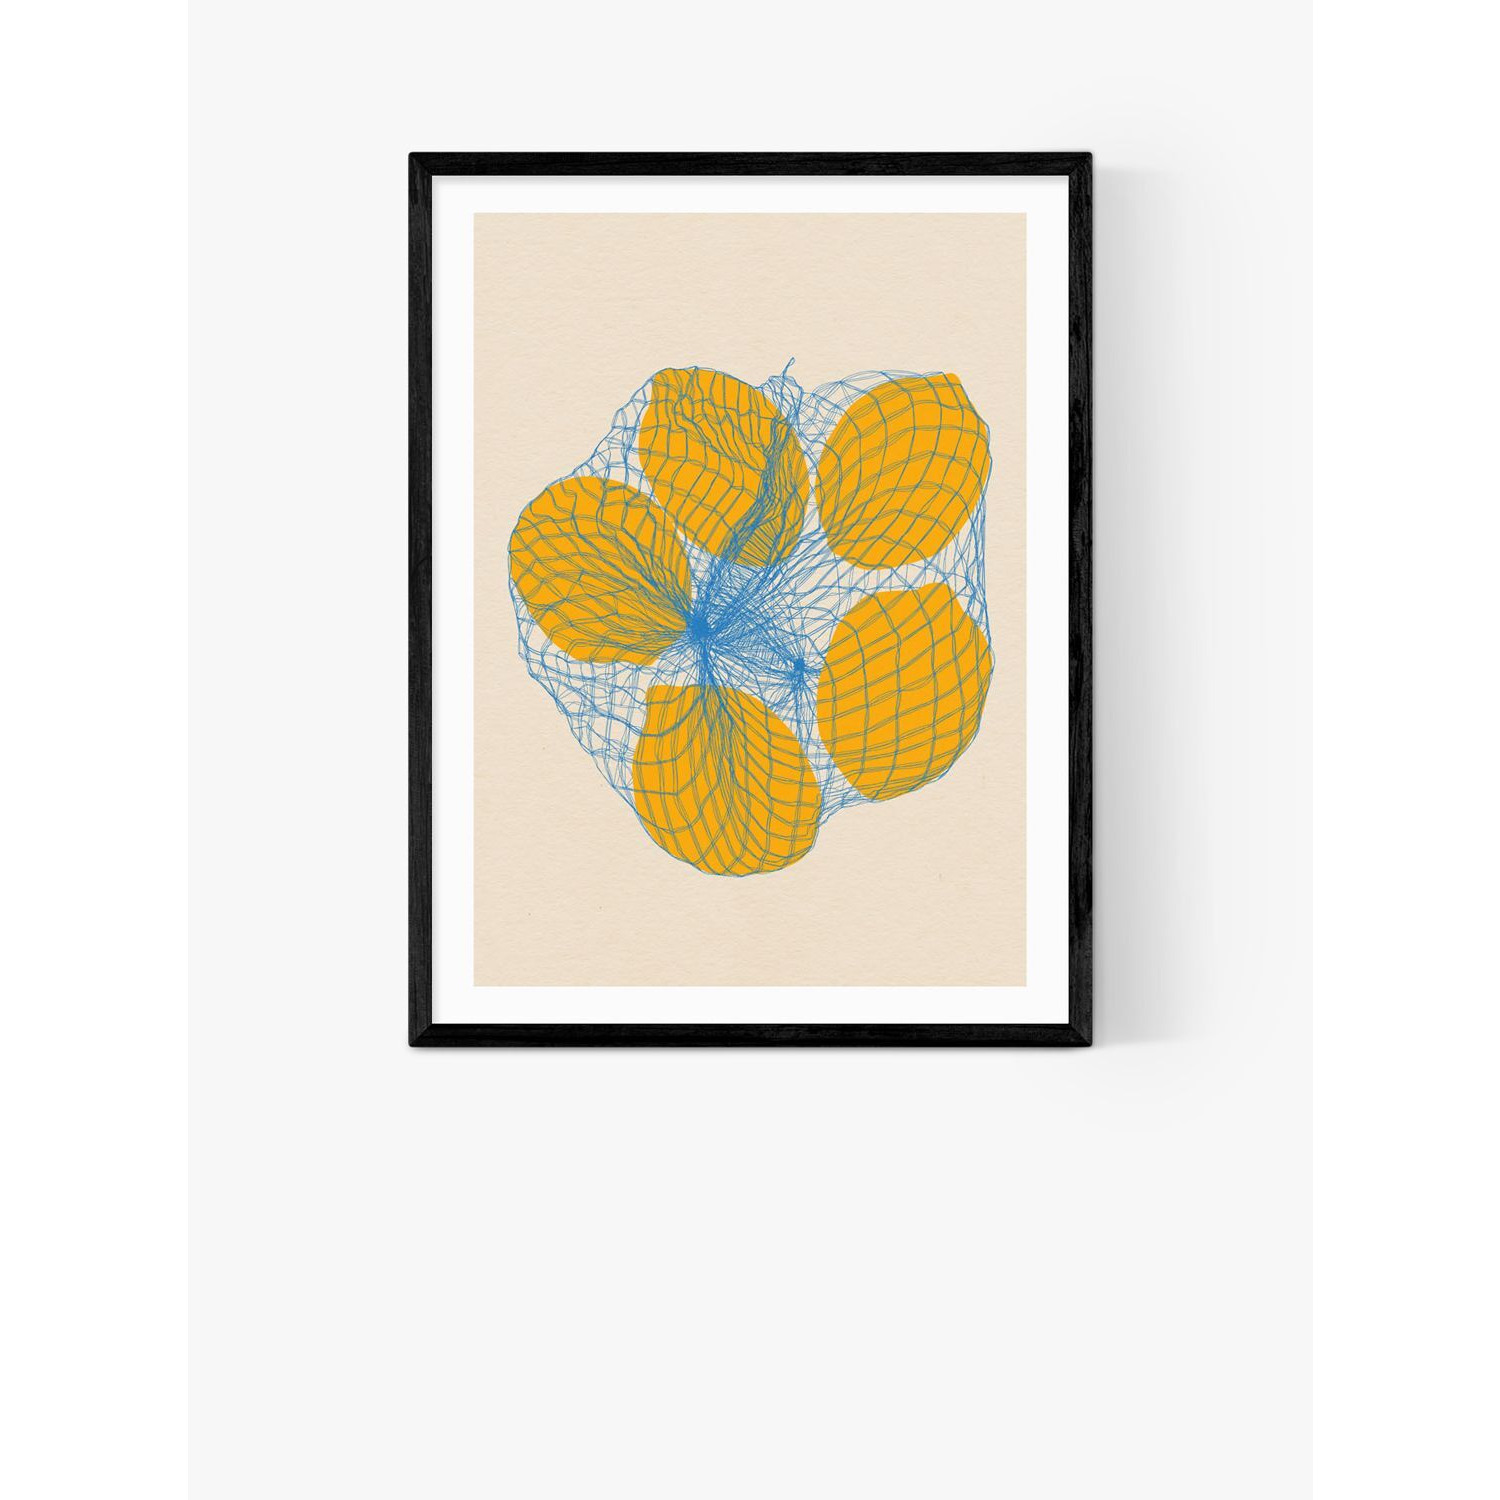 EAST END PRINTS Rosi Feist 'Five Lemons in a Net Bag' Framed Print - image 1